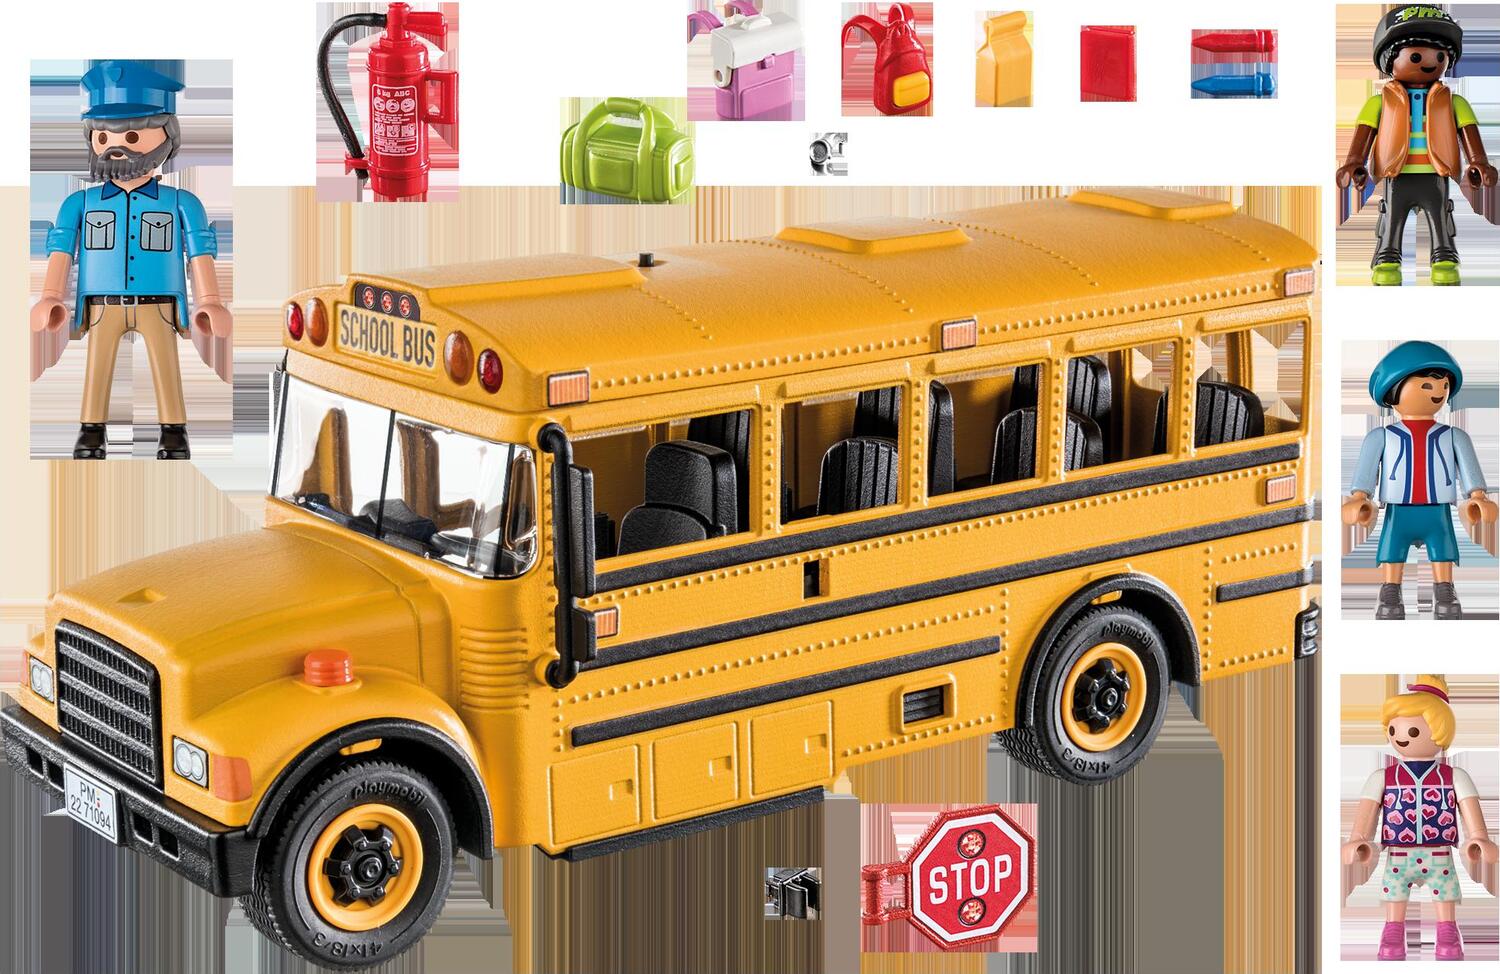 Playmobil School Bus - Imagination Toys